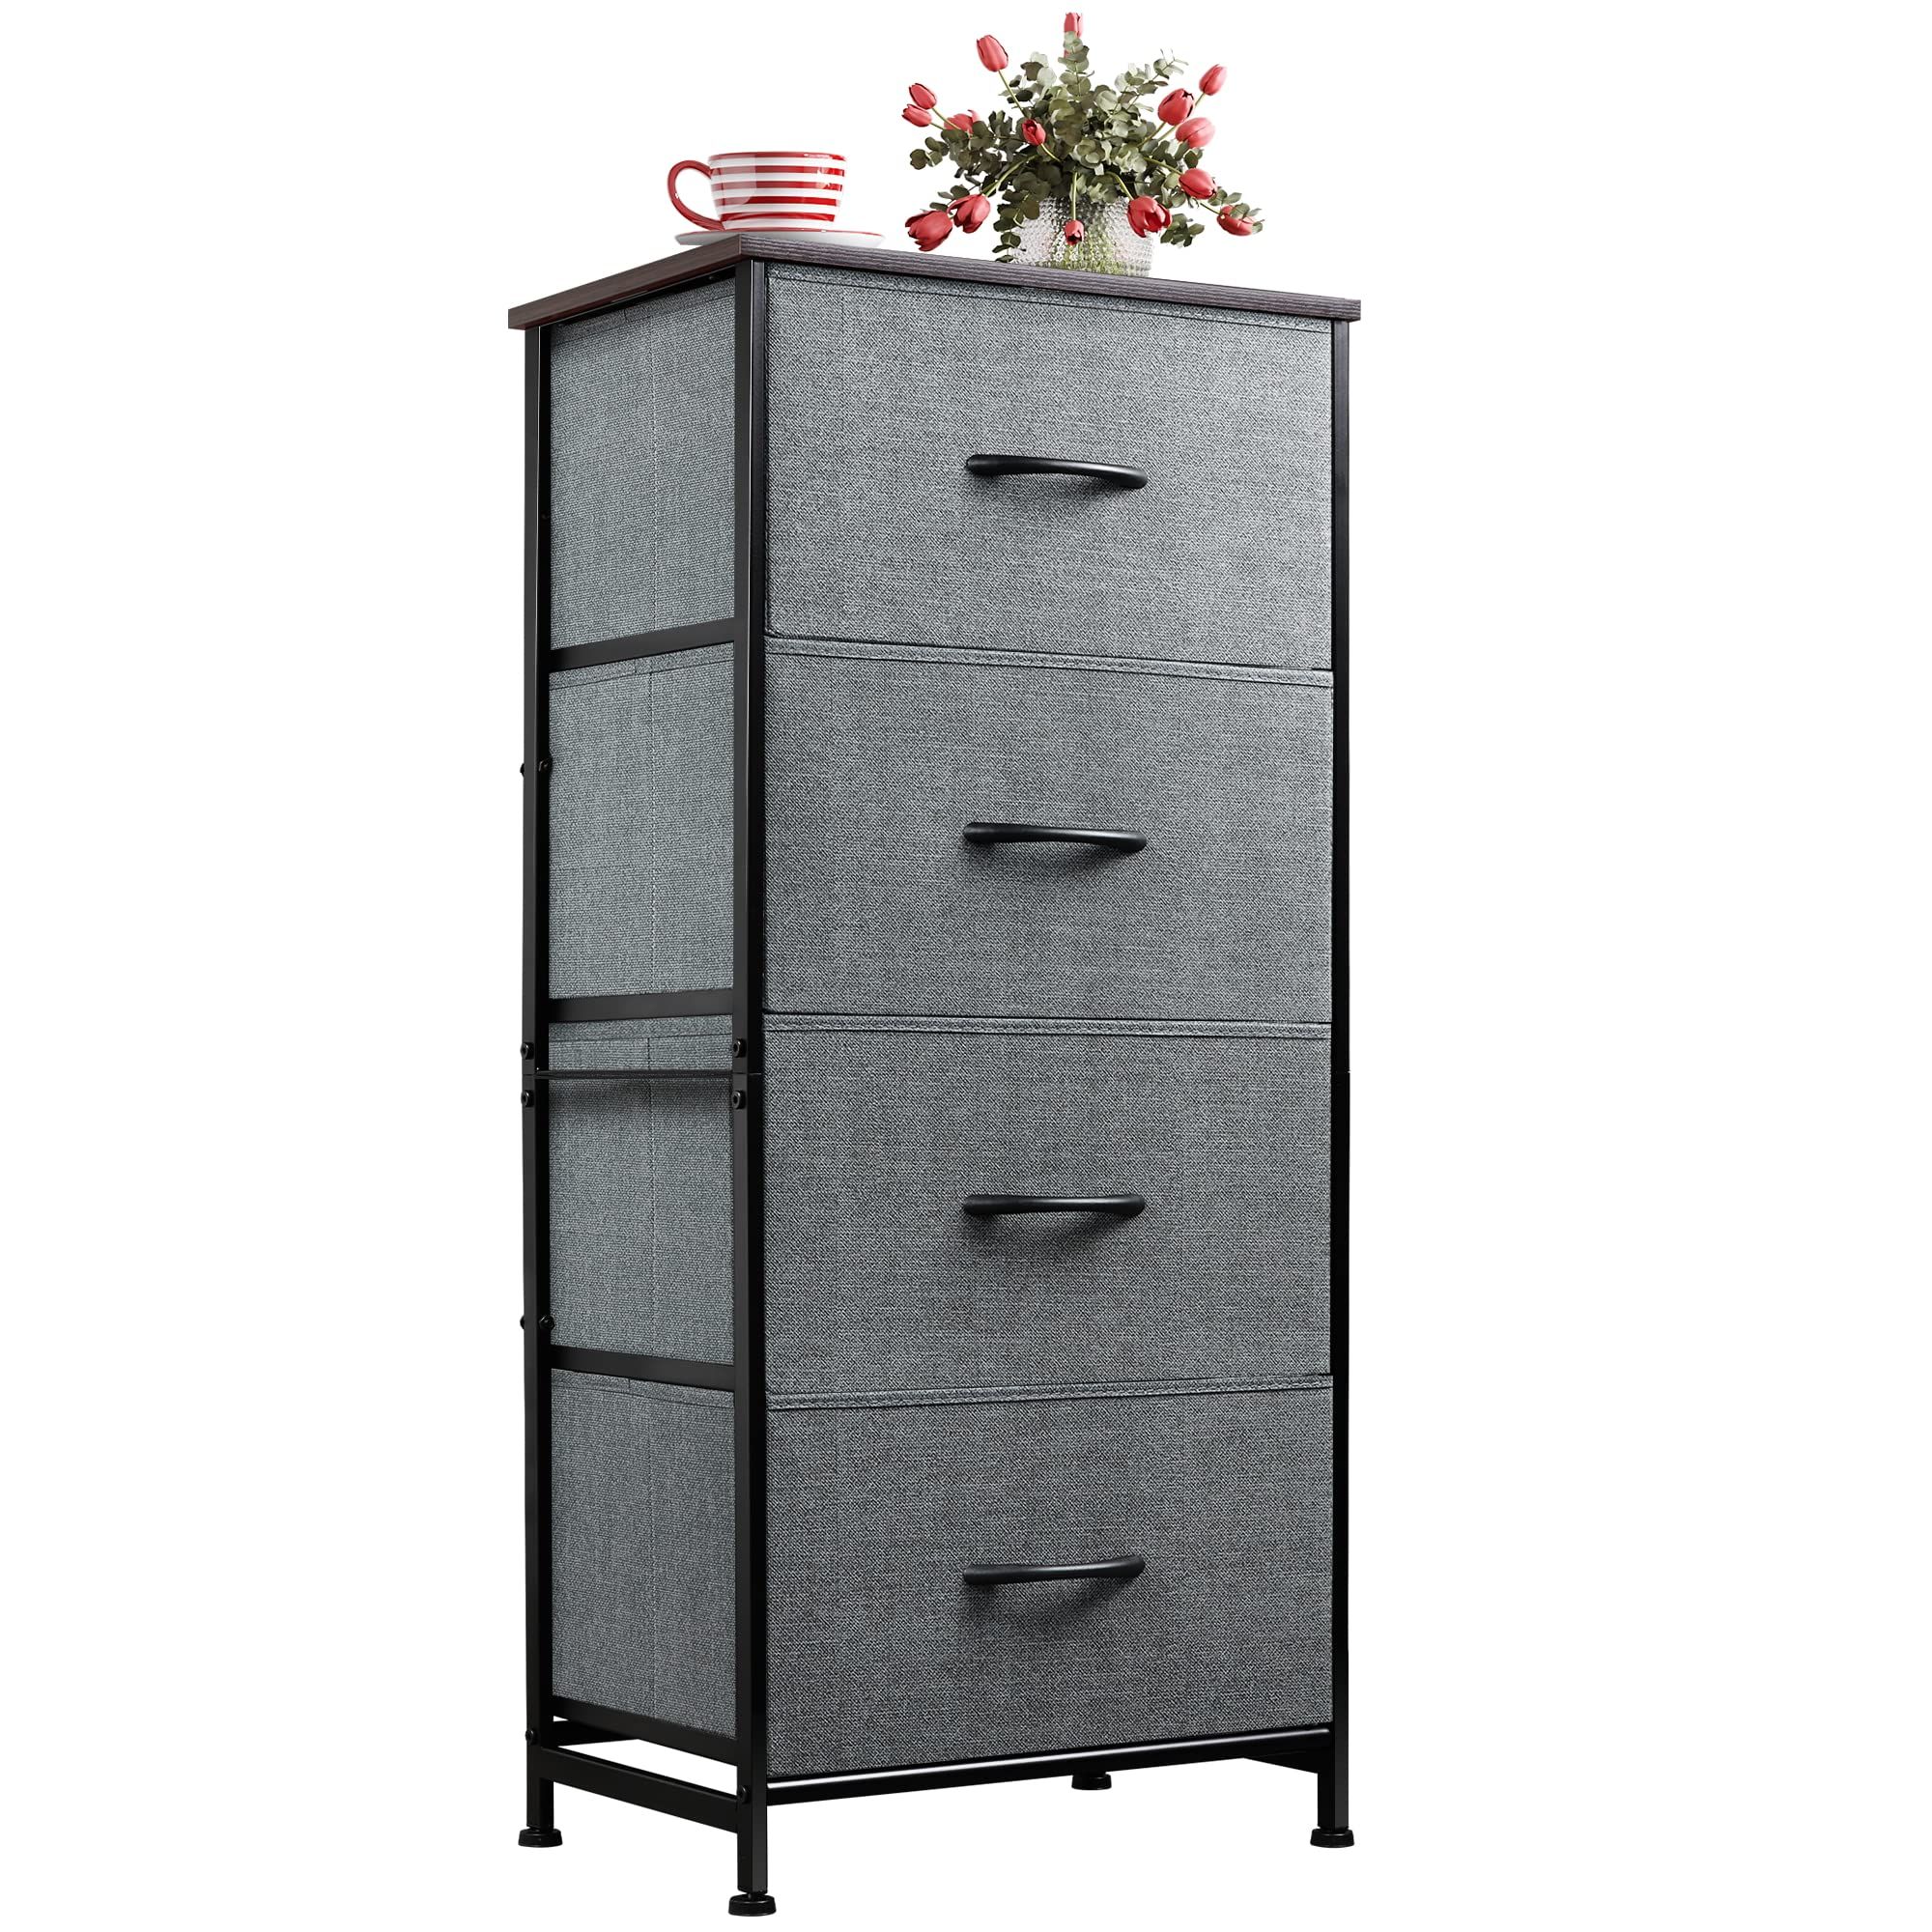 WLIVE Dresser with 4 Drawers, Storage Tower, Organizer Unit, Fabric Dresser for Bedroom, Hallway,... | Amazon (US)